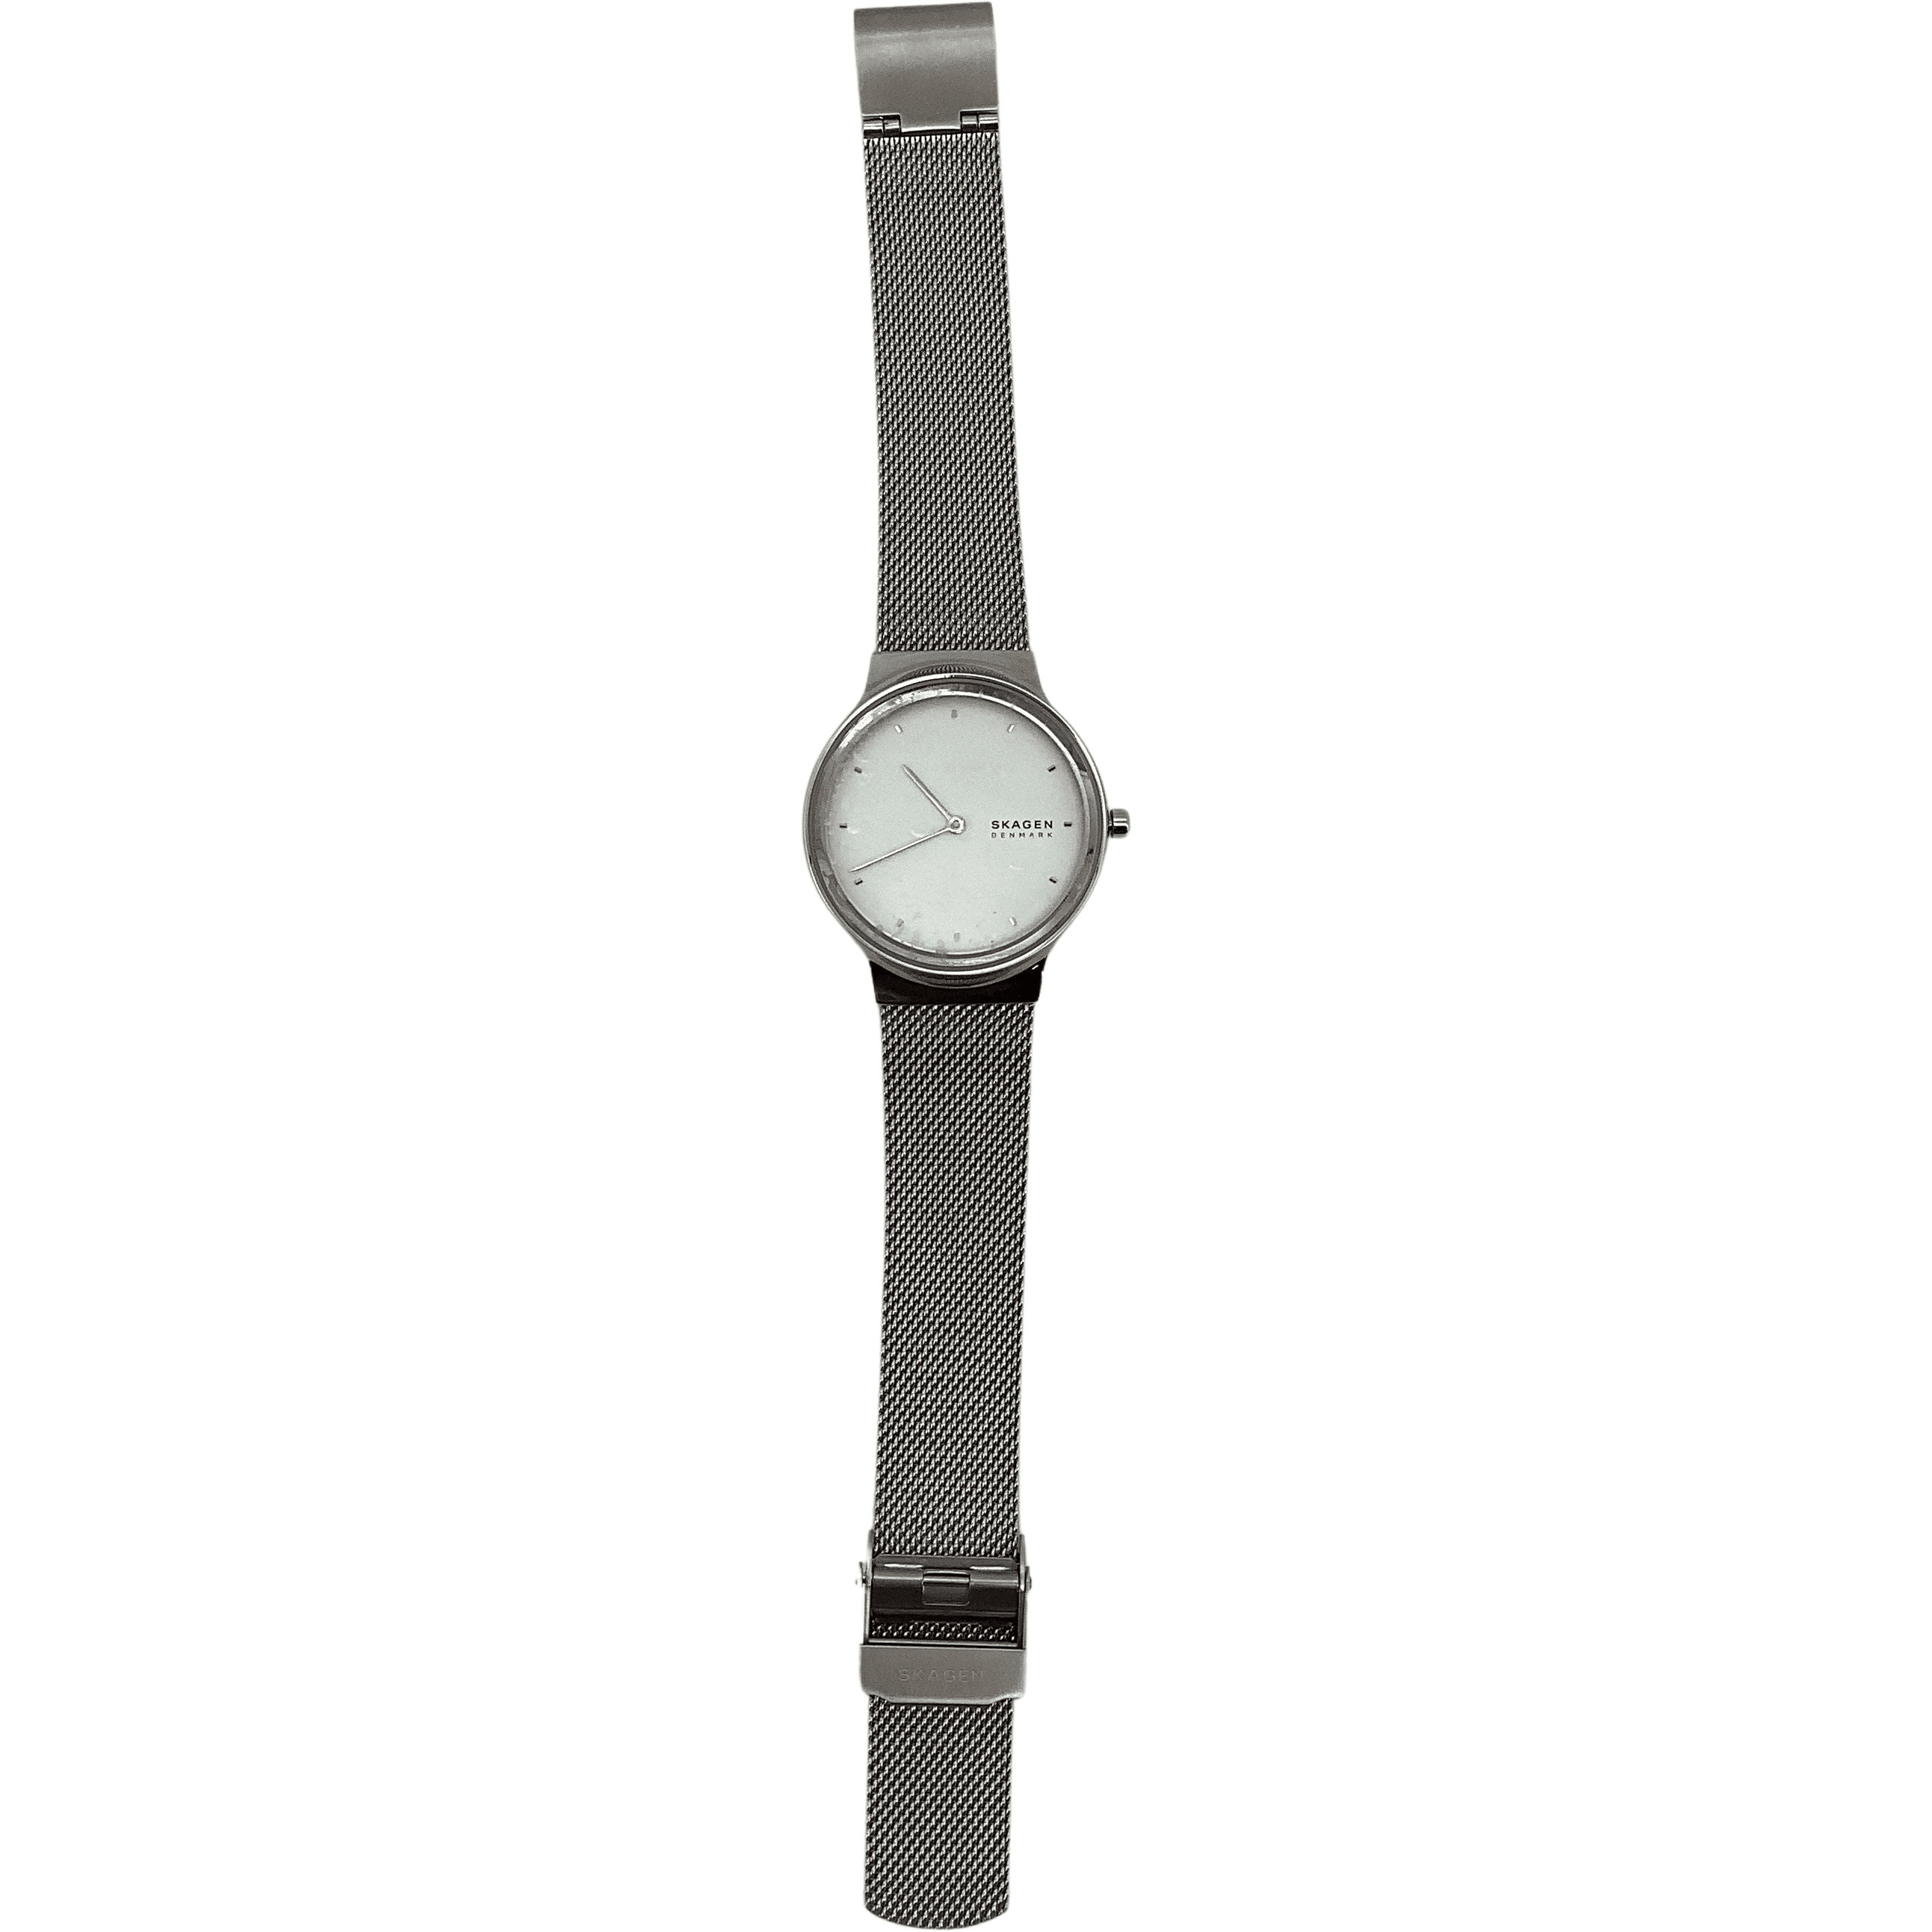 Skagen Women's Analog Wrist Watch / Stainless Steel / Bracelet Band / Women's Accessories